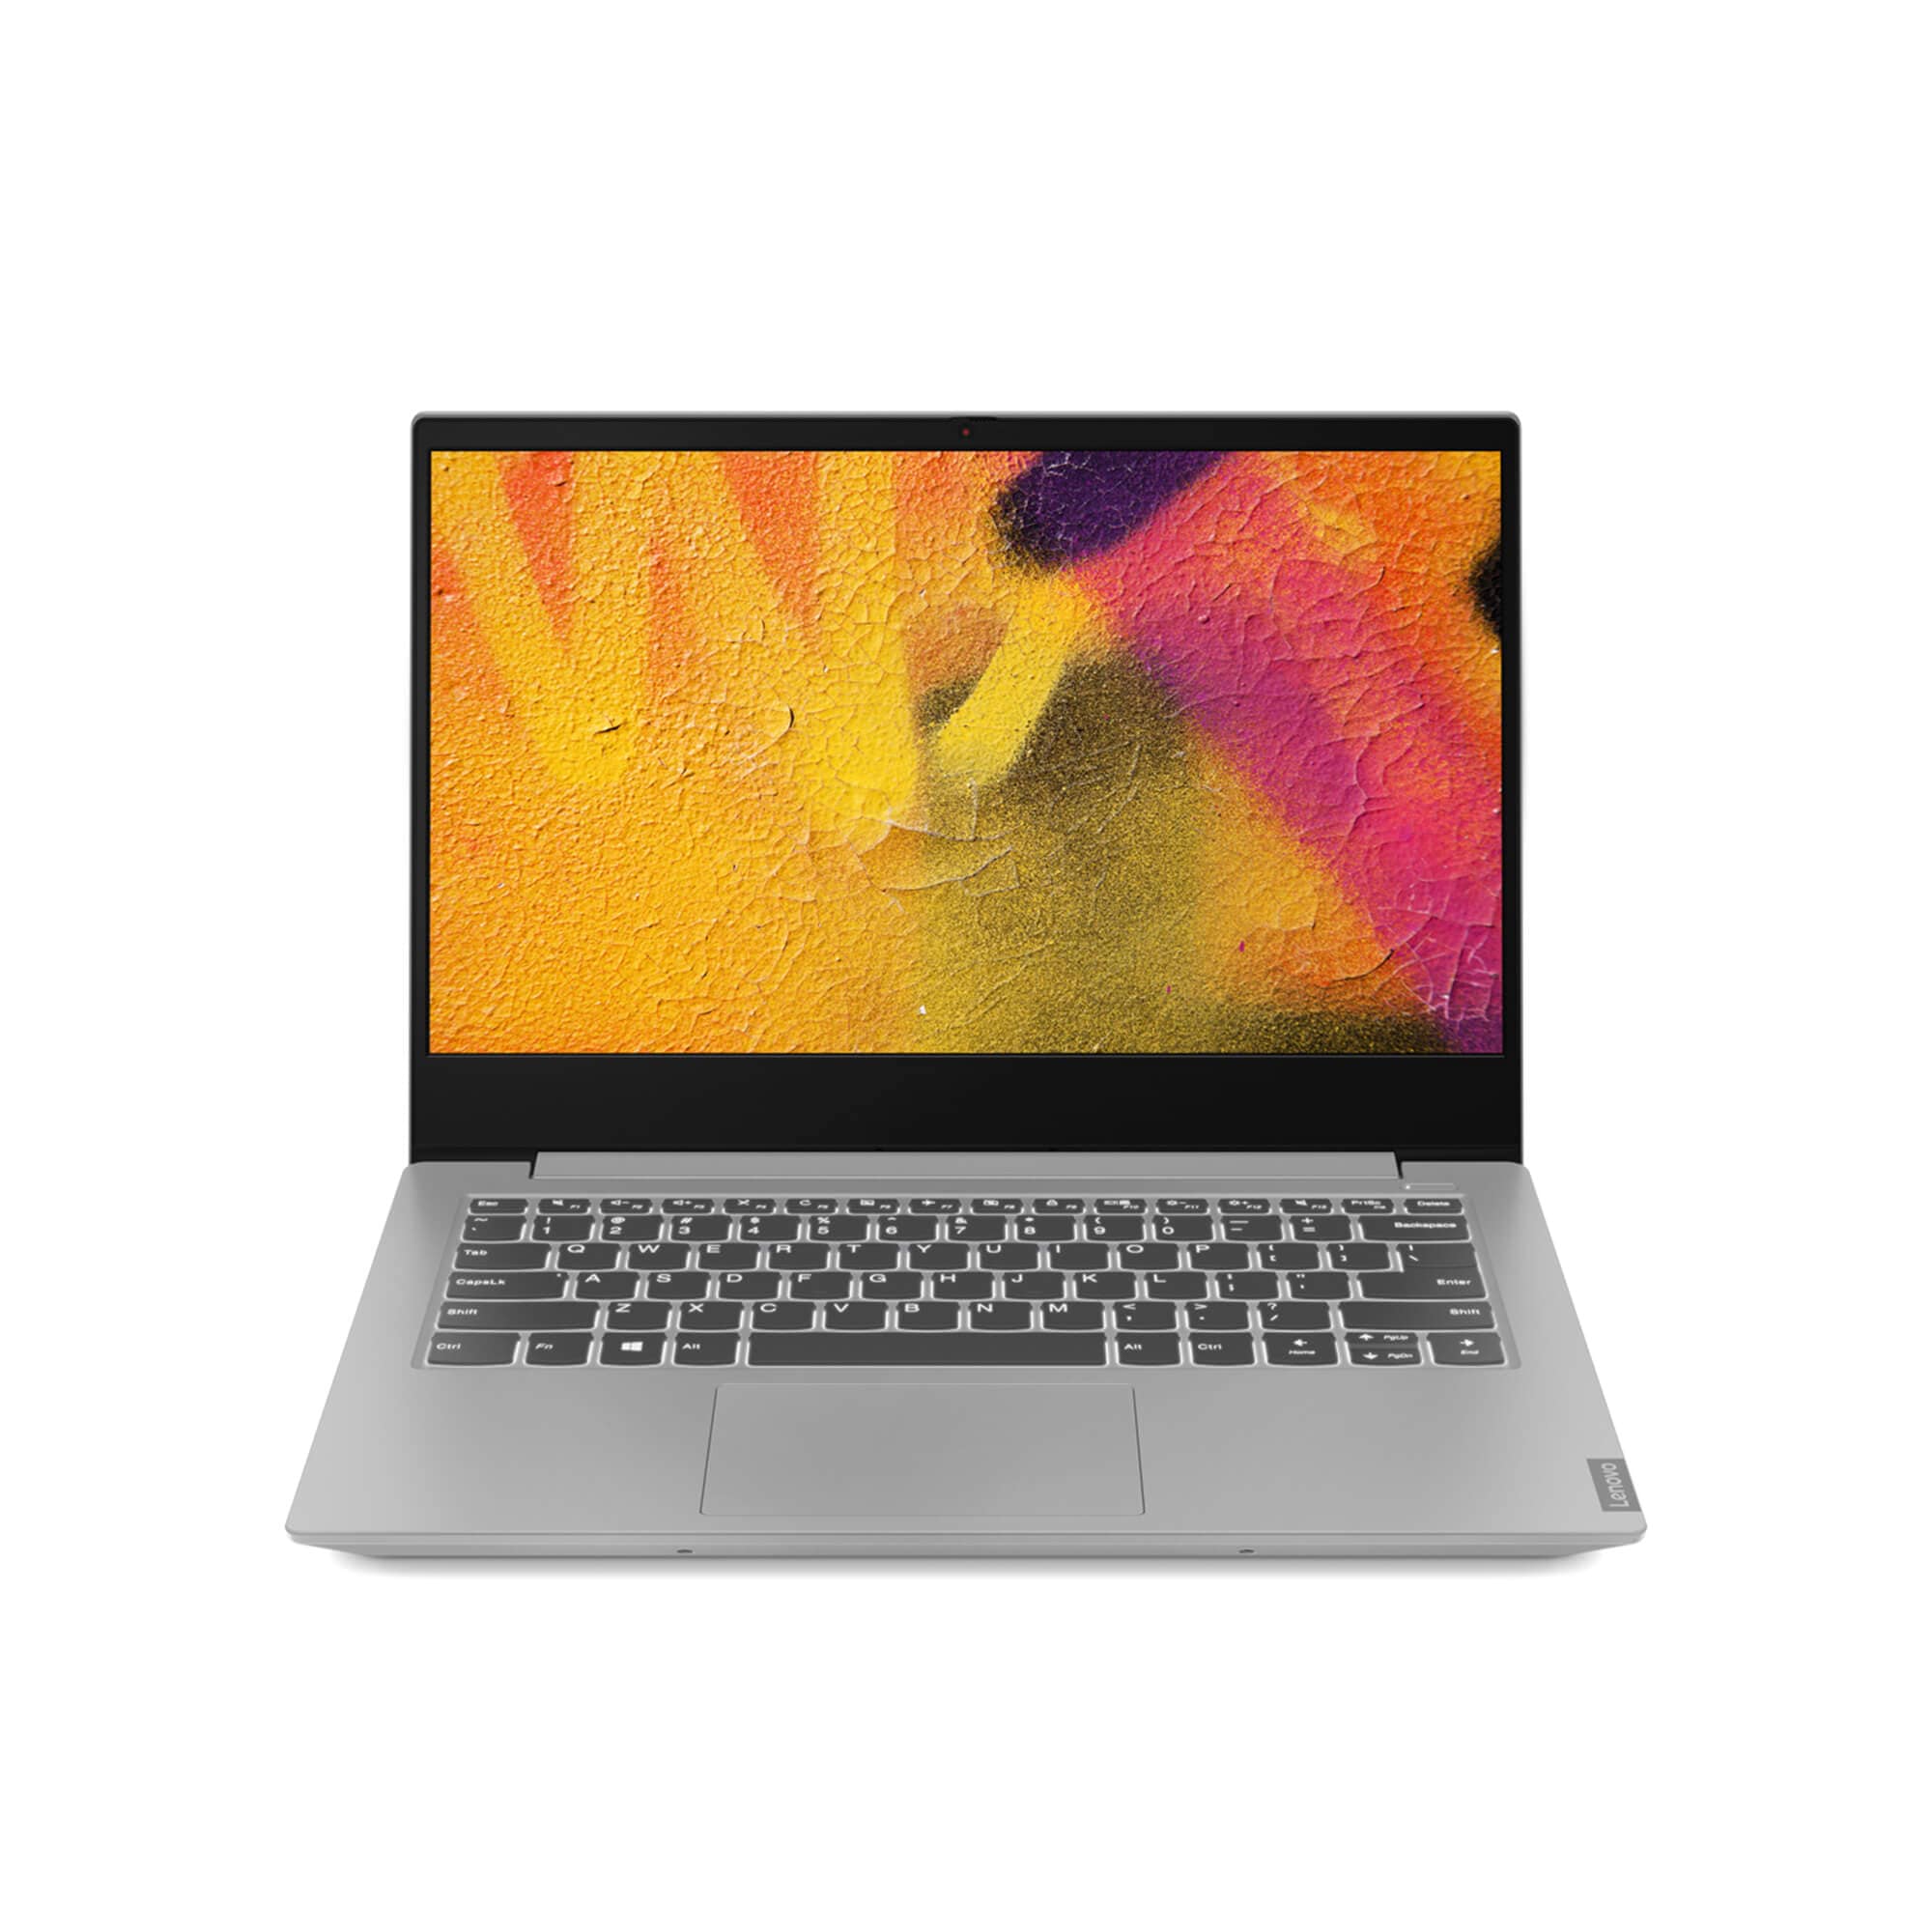 Lenovo IdeaPad S340 Touch Laptop, 15.6" FHD IPS  250 nits, i5-8265U,   UHD Graphics 620, 8GB, 256GB SSD - image 1 of 5